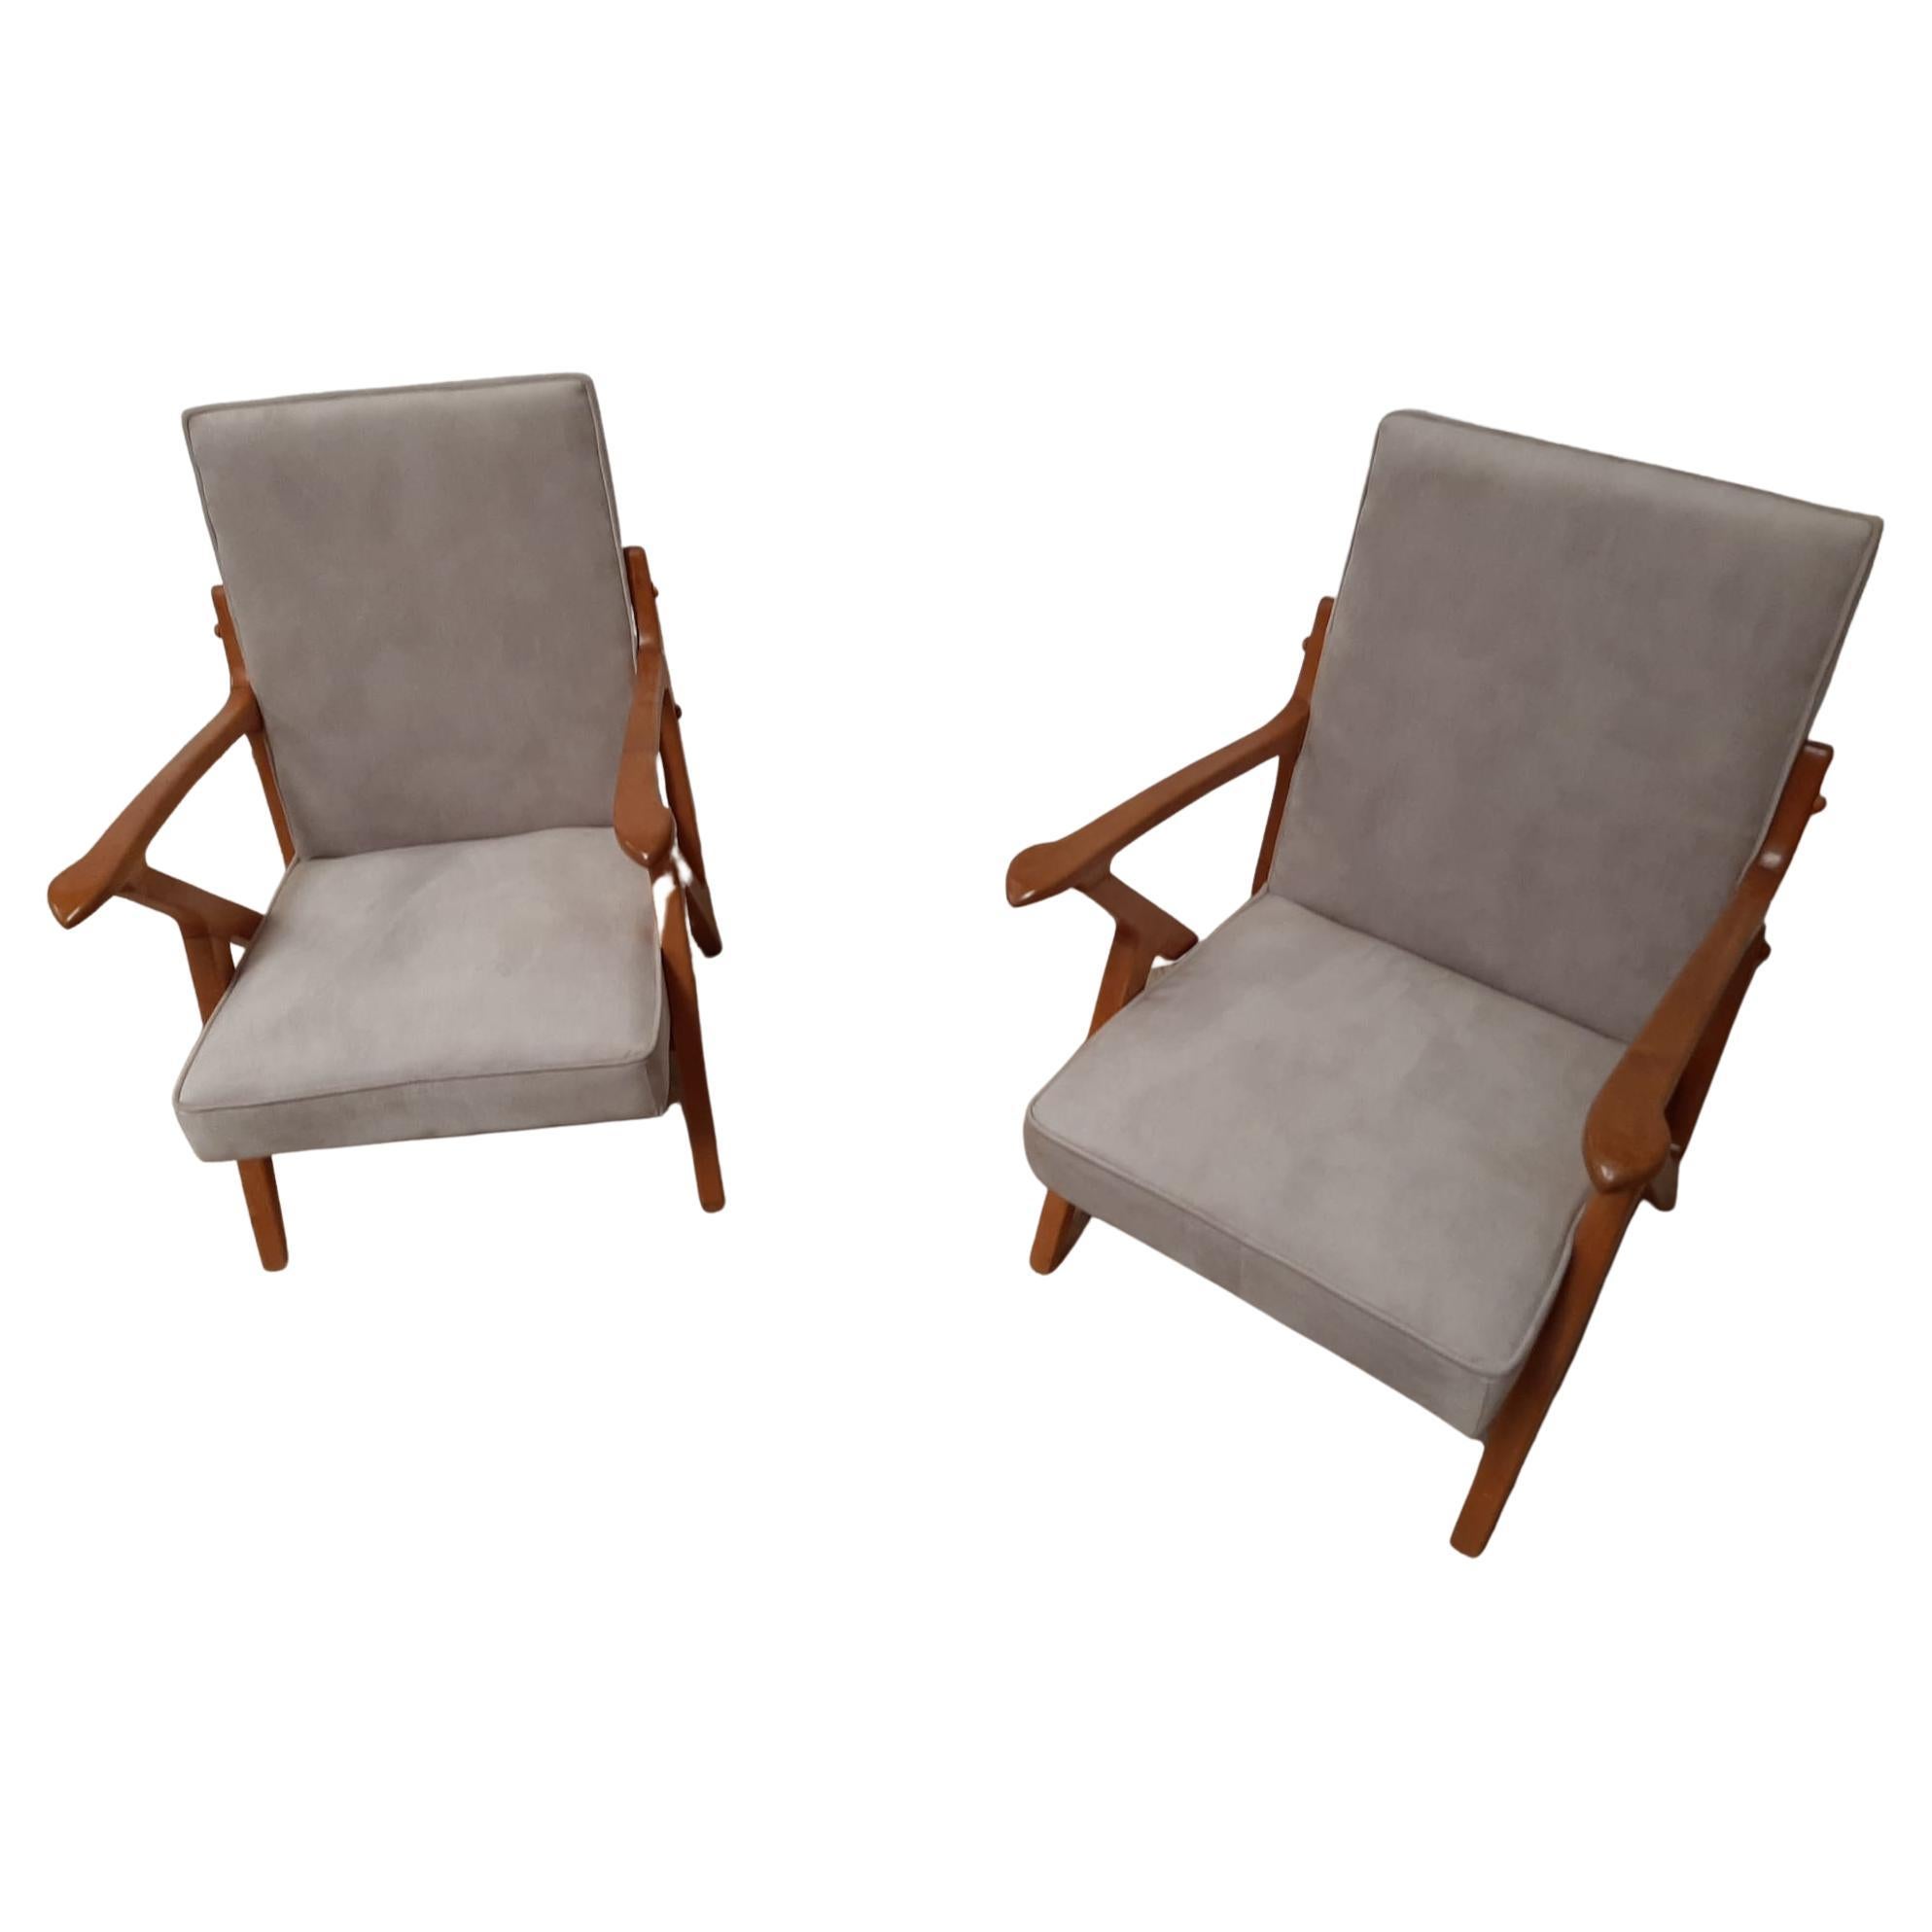 Original 1970s Designer Mid-Century Style Armchairs, Mid-Century Danish Chairs For Sale